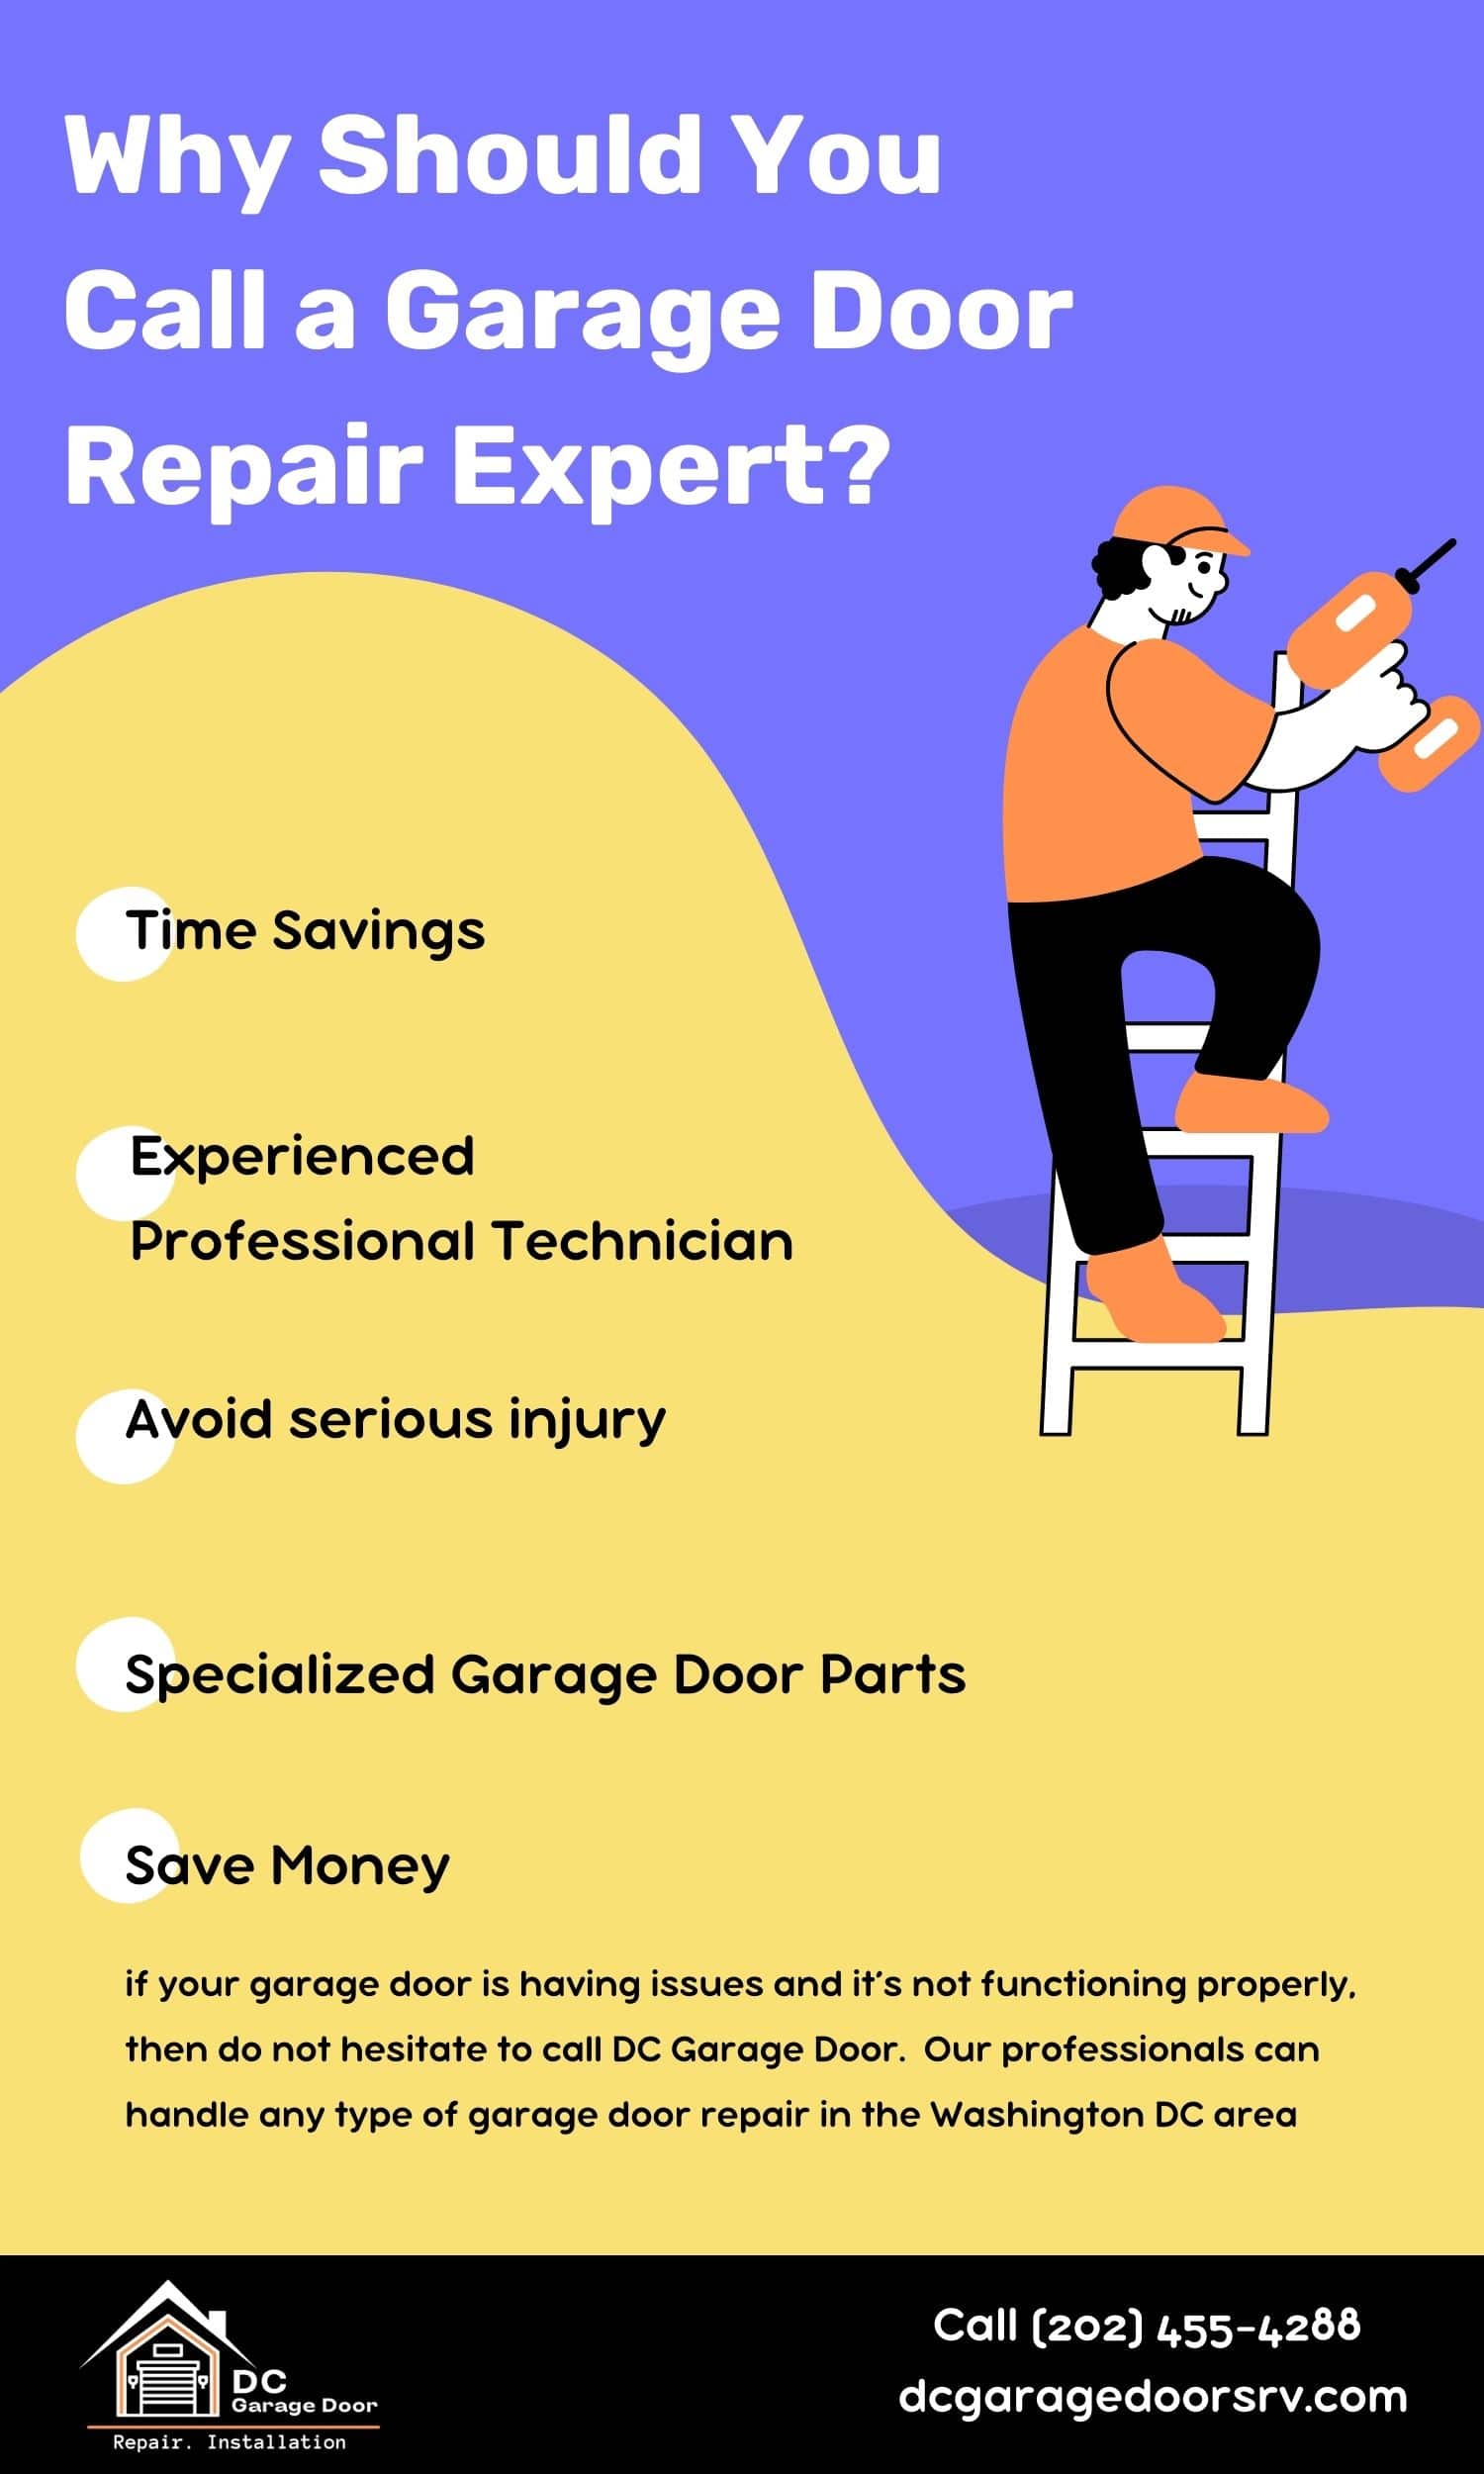 Why Should You Call a Garage Door Repair Expert in Washington DC